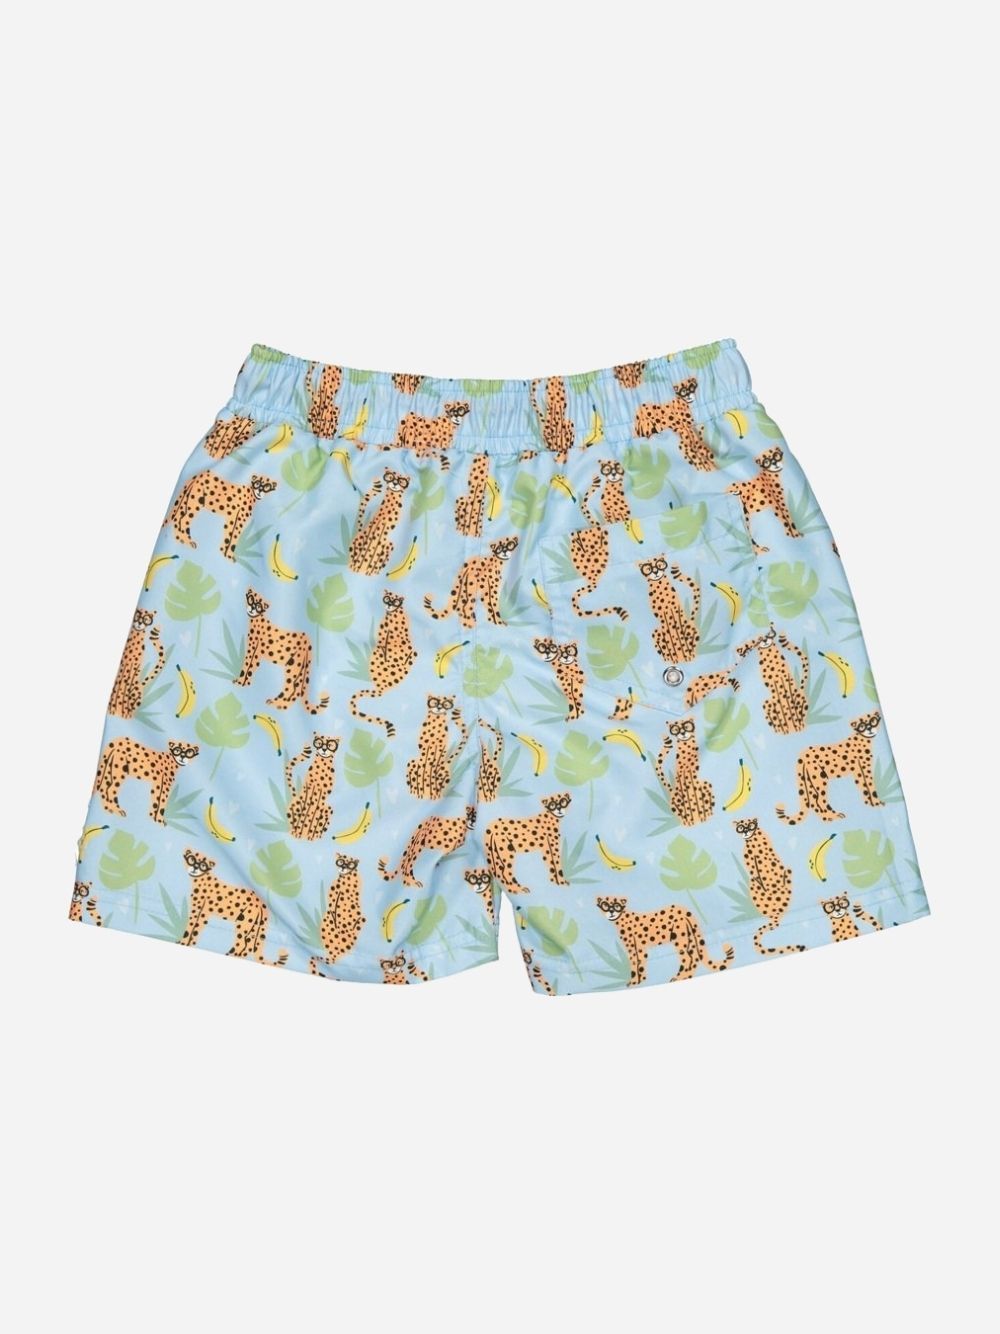 Mr. Leopard classic swim shorts